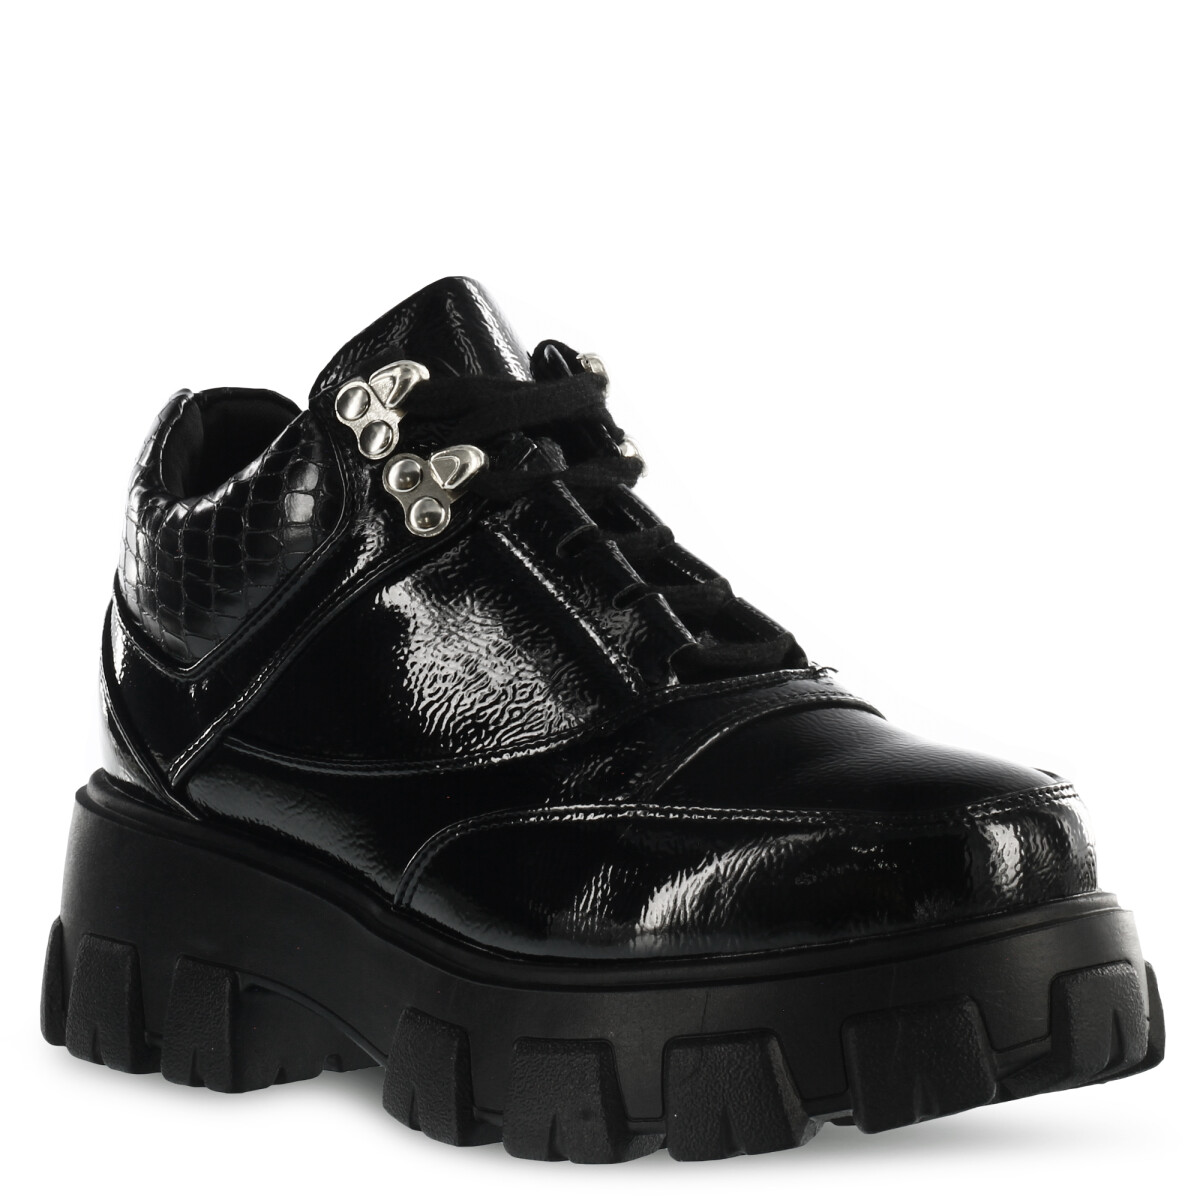 Zapato BILLIE acordonado MissCarol - Black/Pattent 